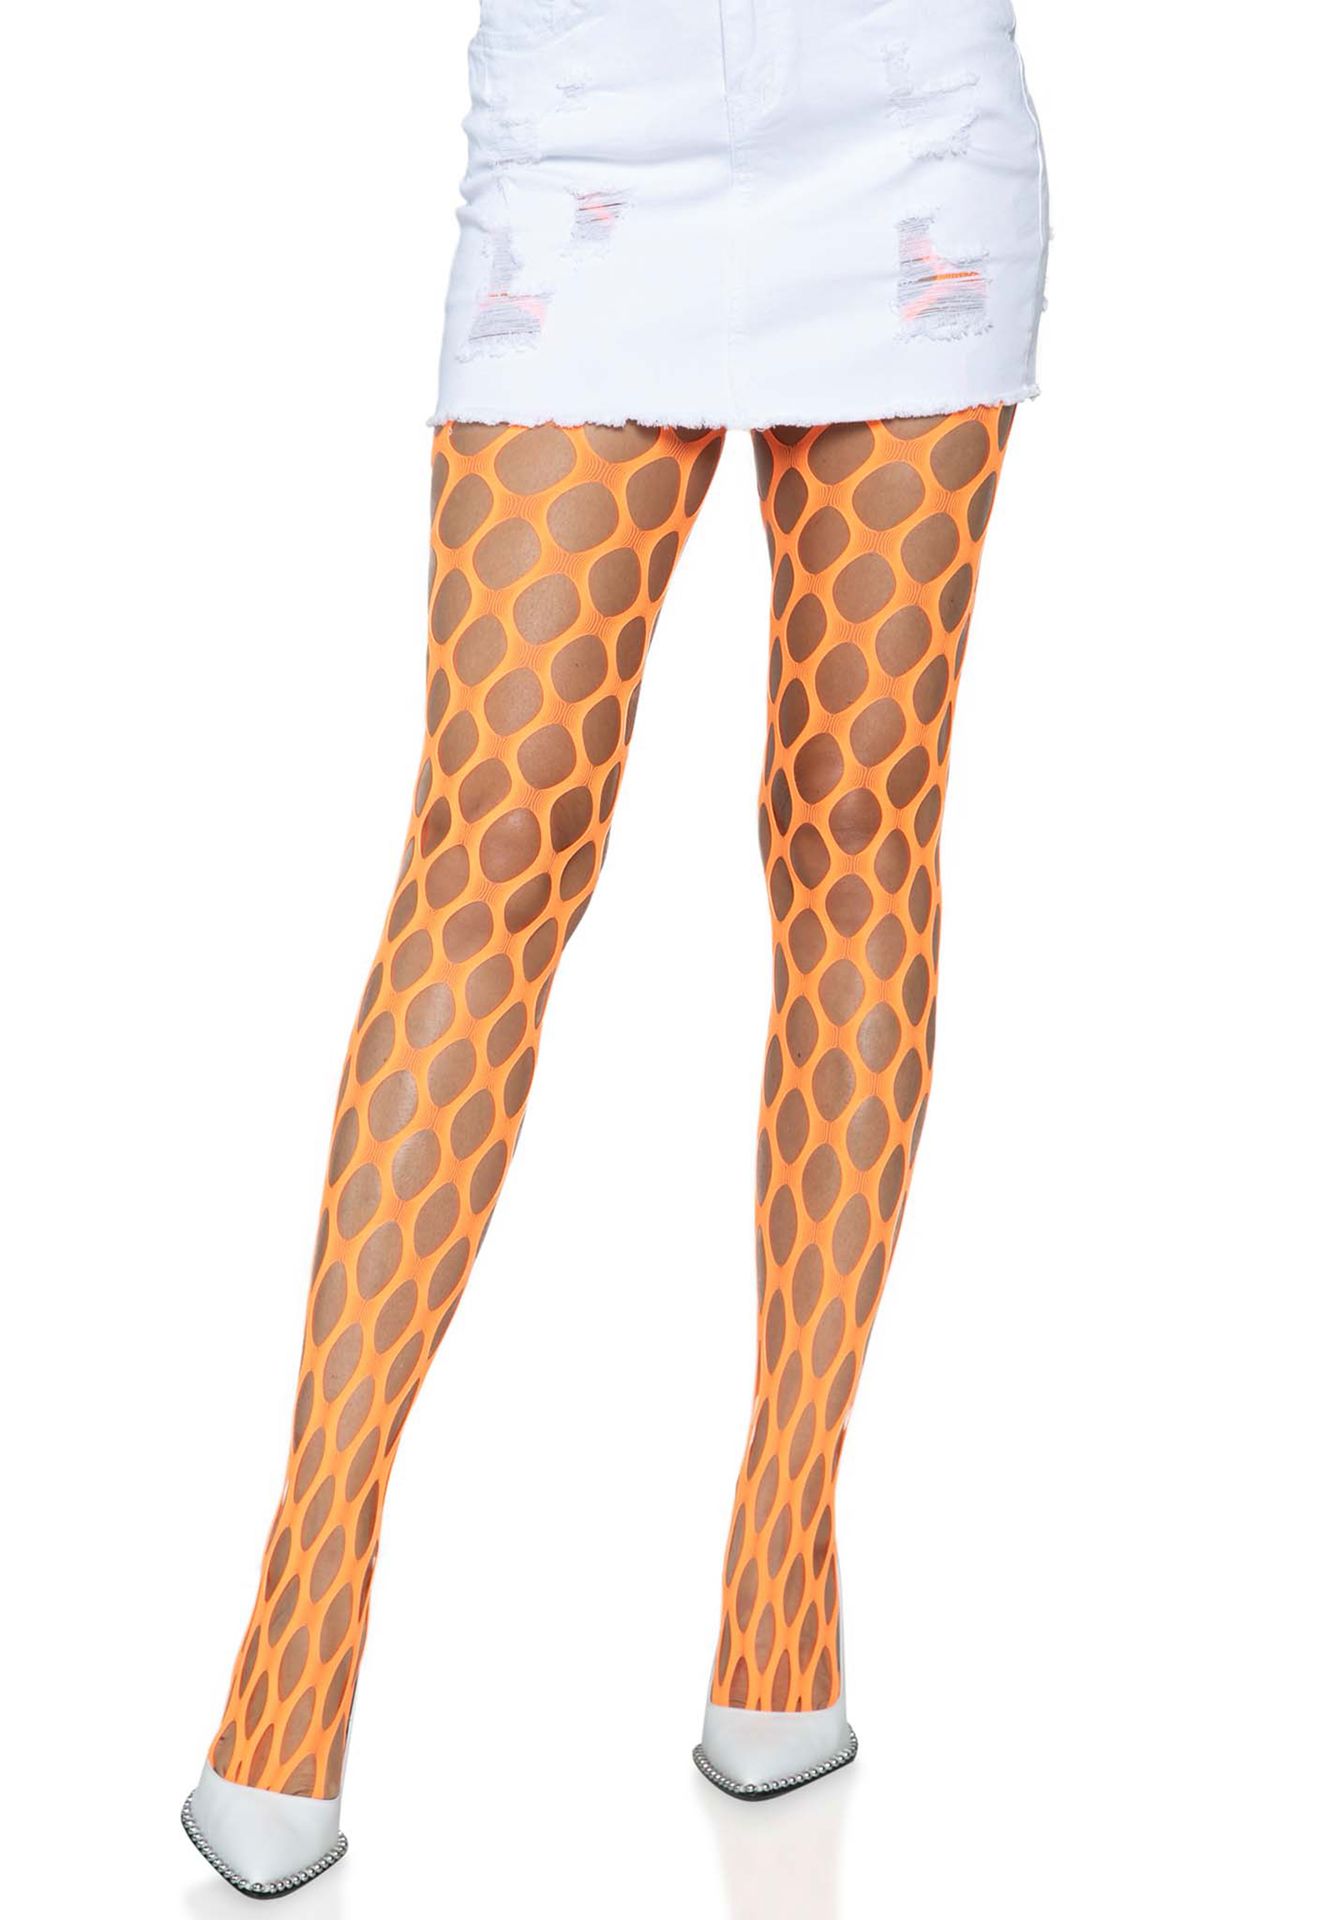 Neon oranje panty met grote gaten